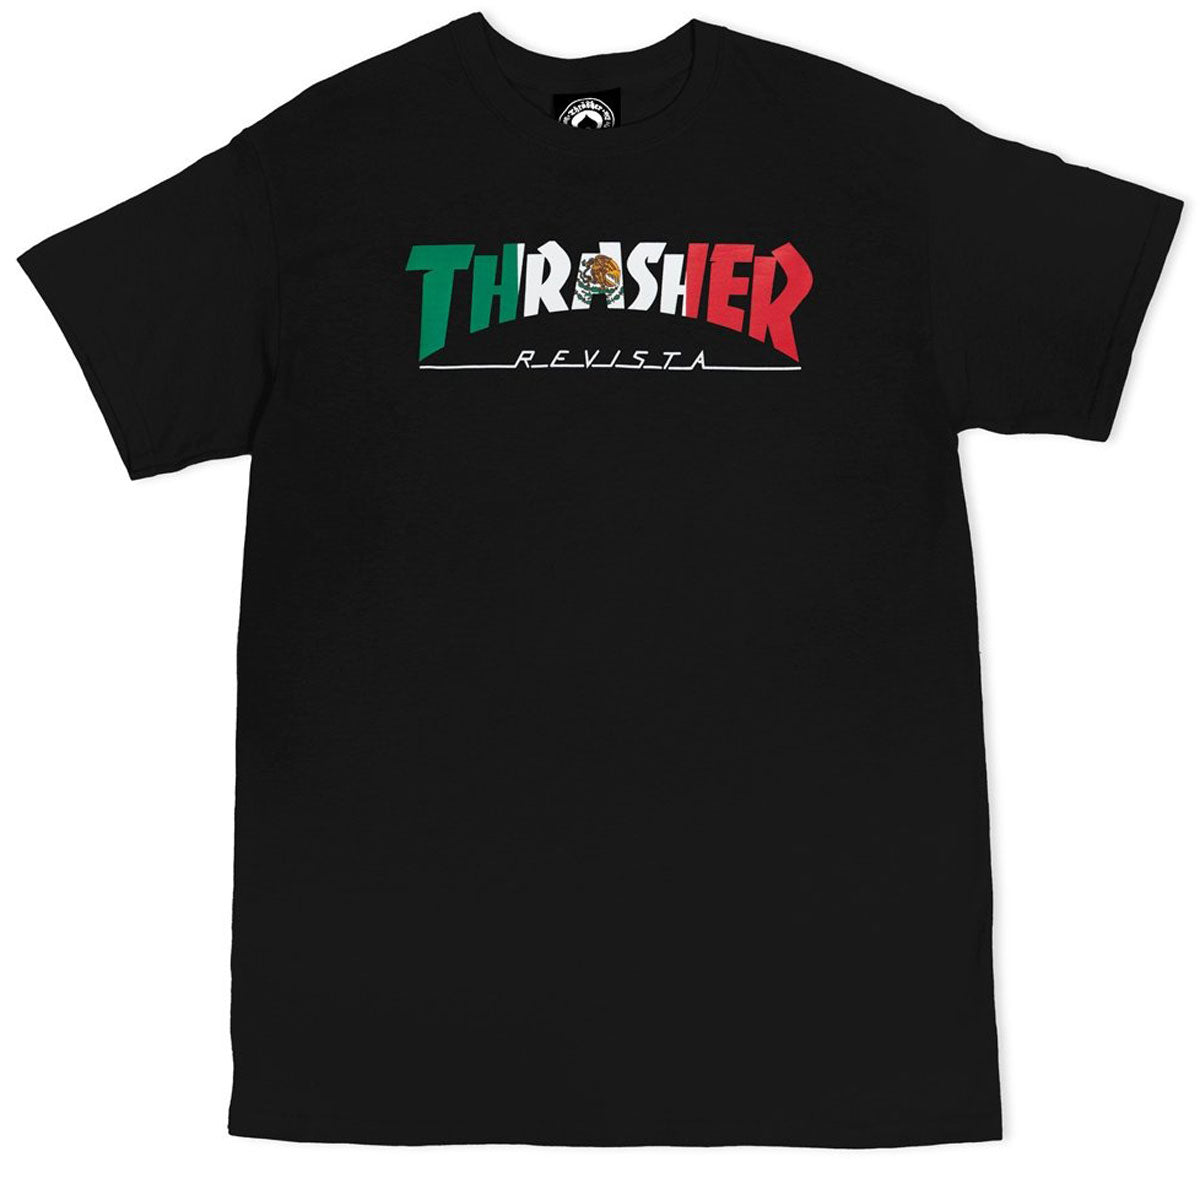 Thrasher Mexico T-Shirt - Black image 1